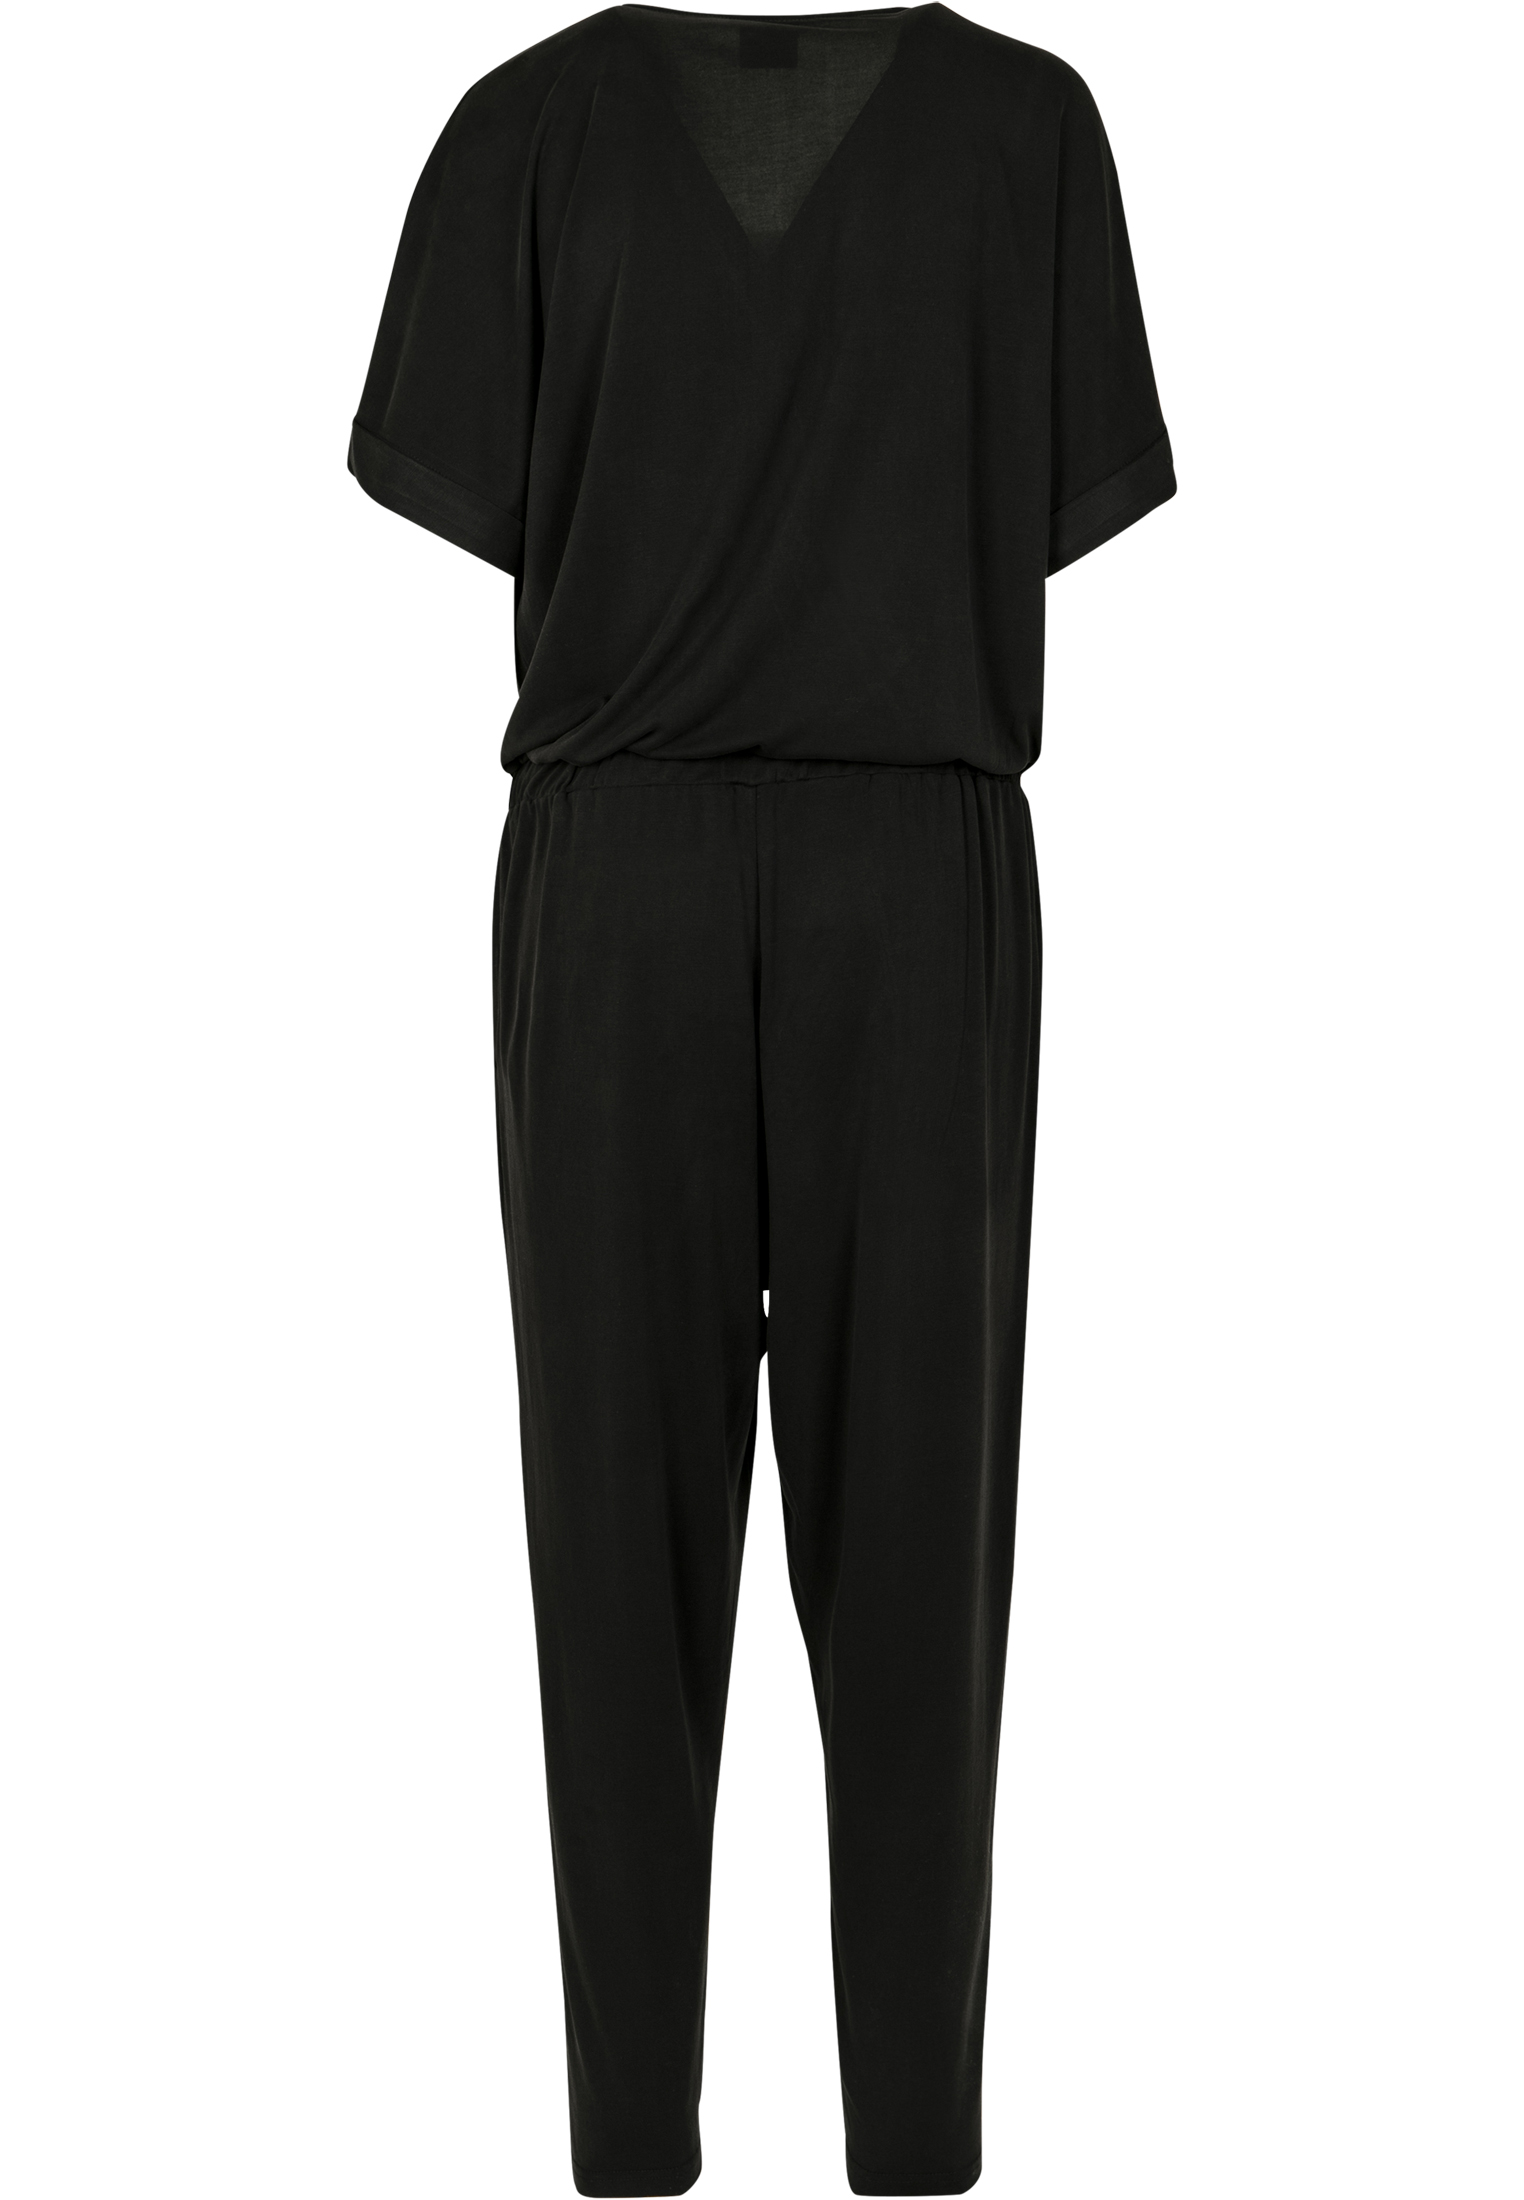 Curvy Ladies Modal Jumpsuit in Farbe black